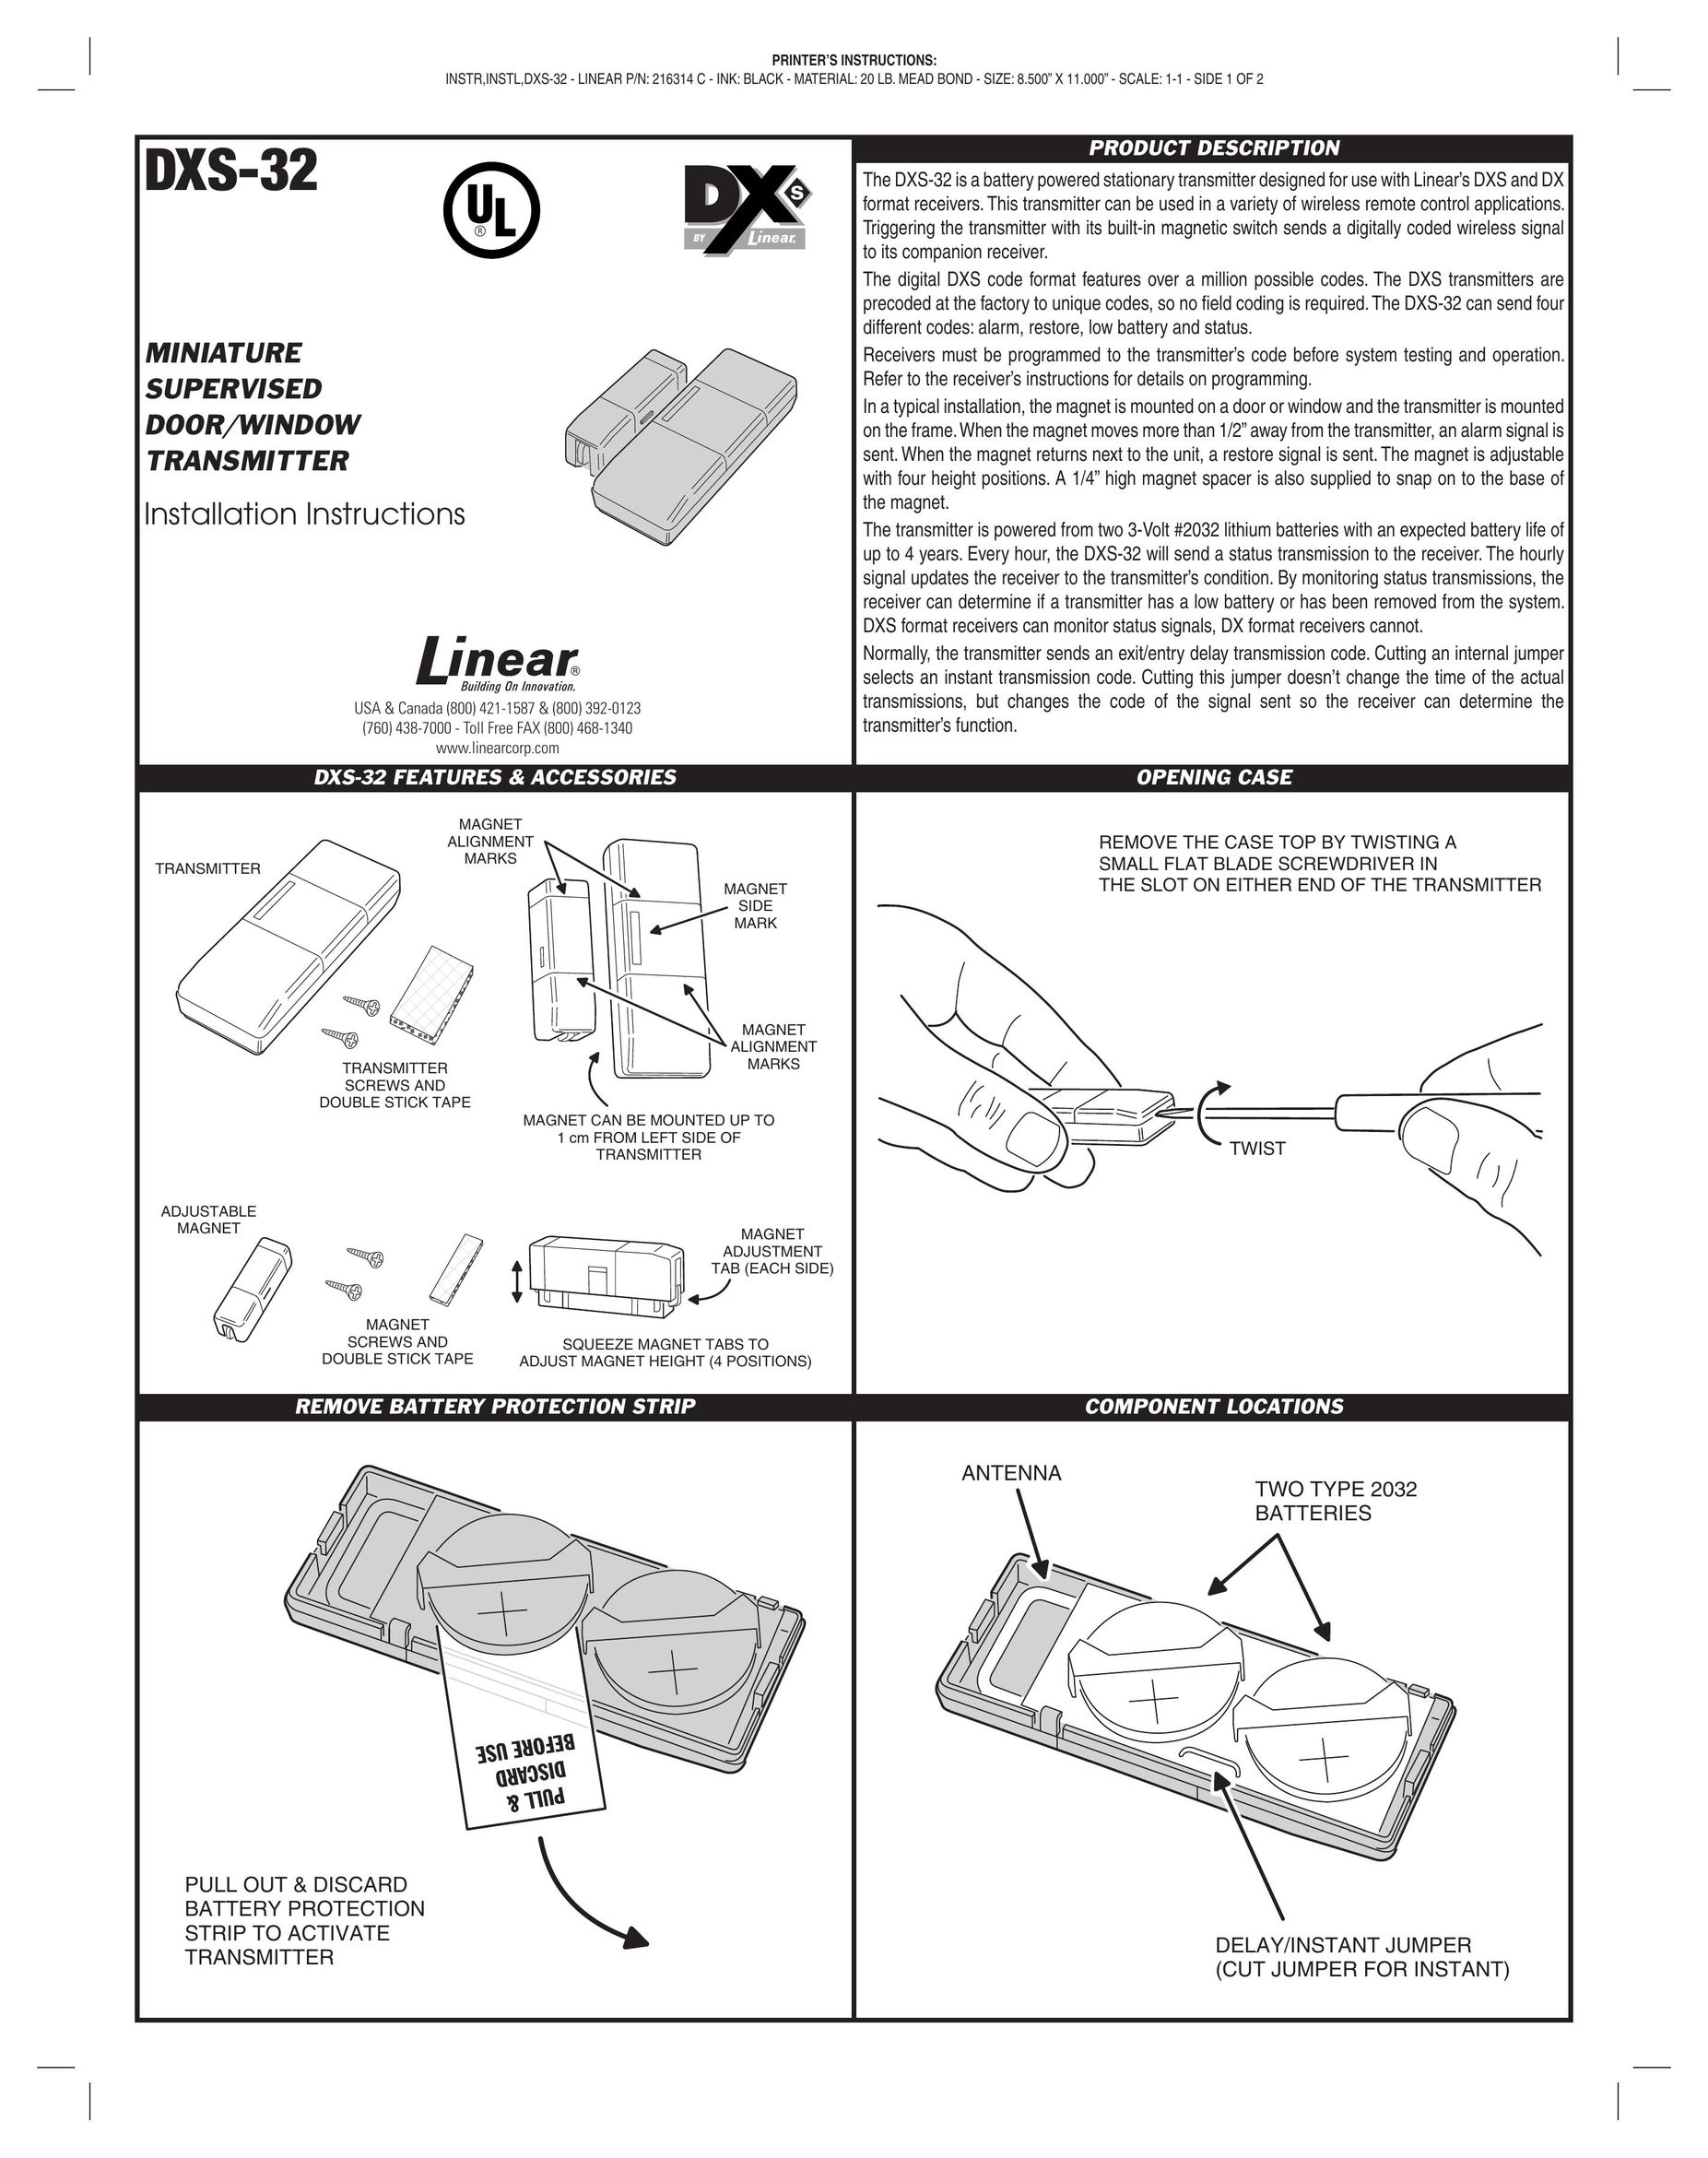 Linear DXS-32 Satellite Radio User Manual